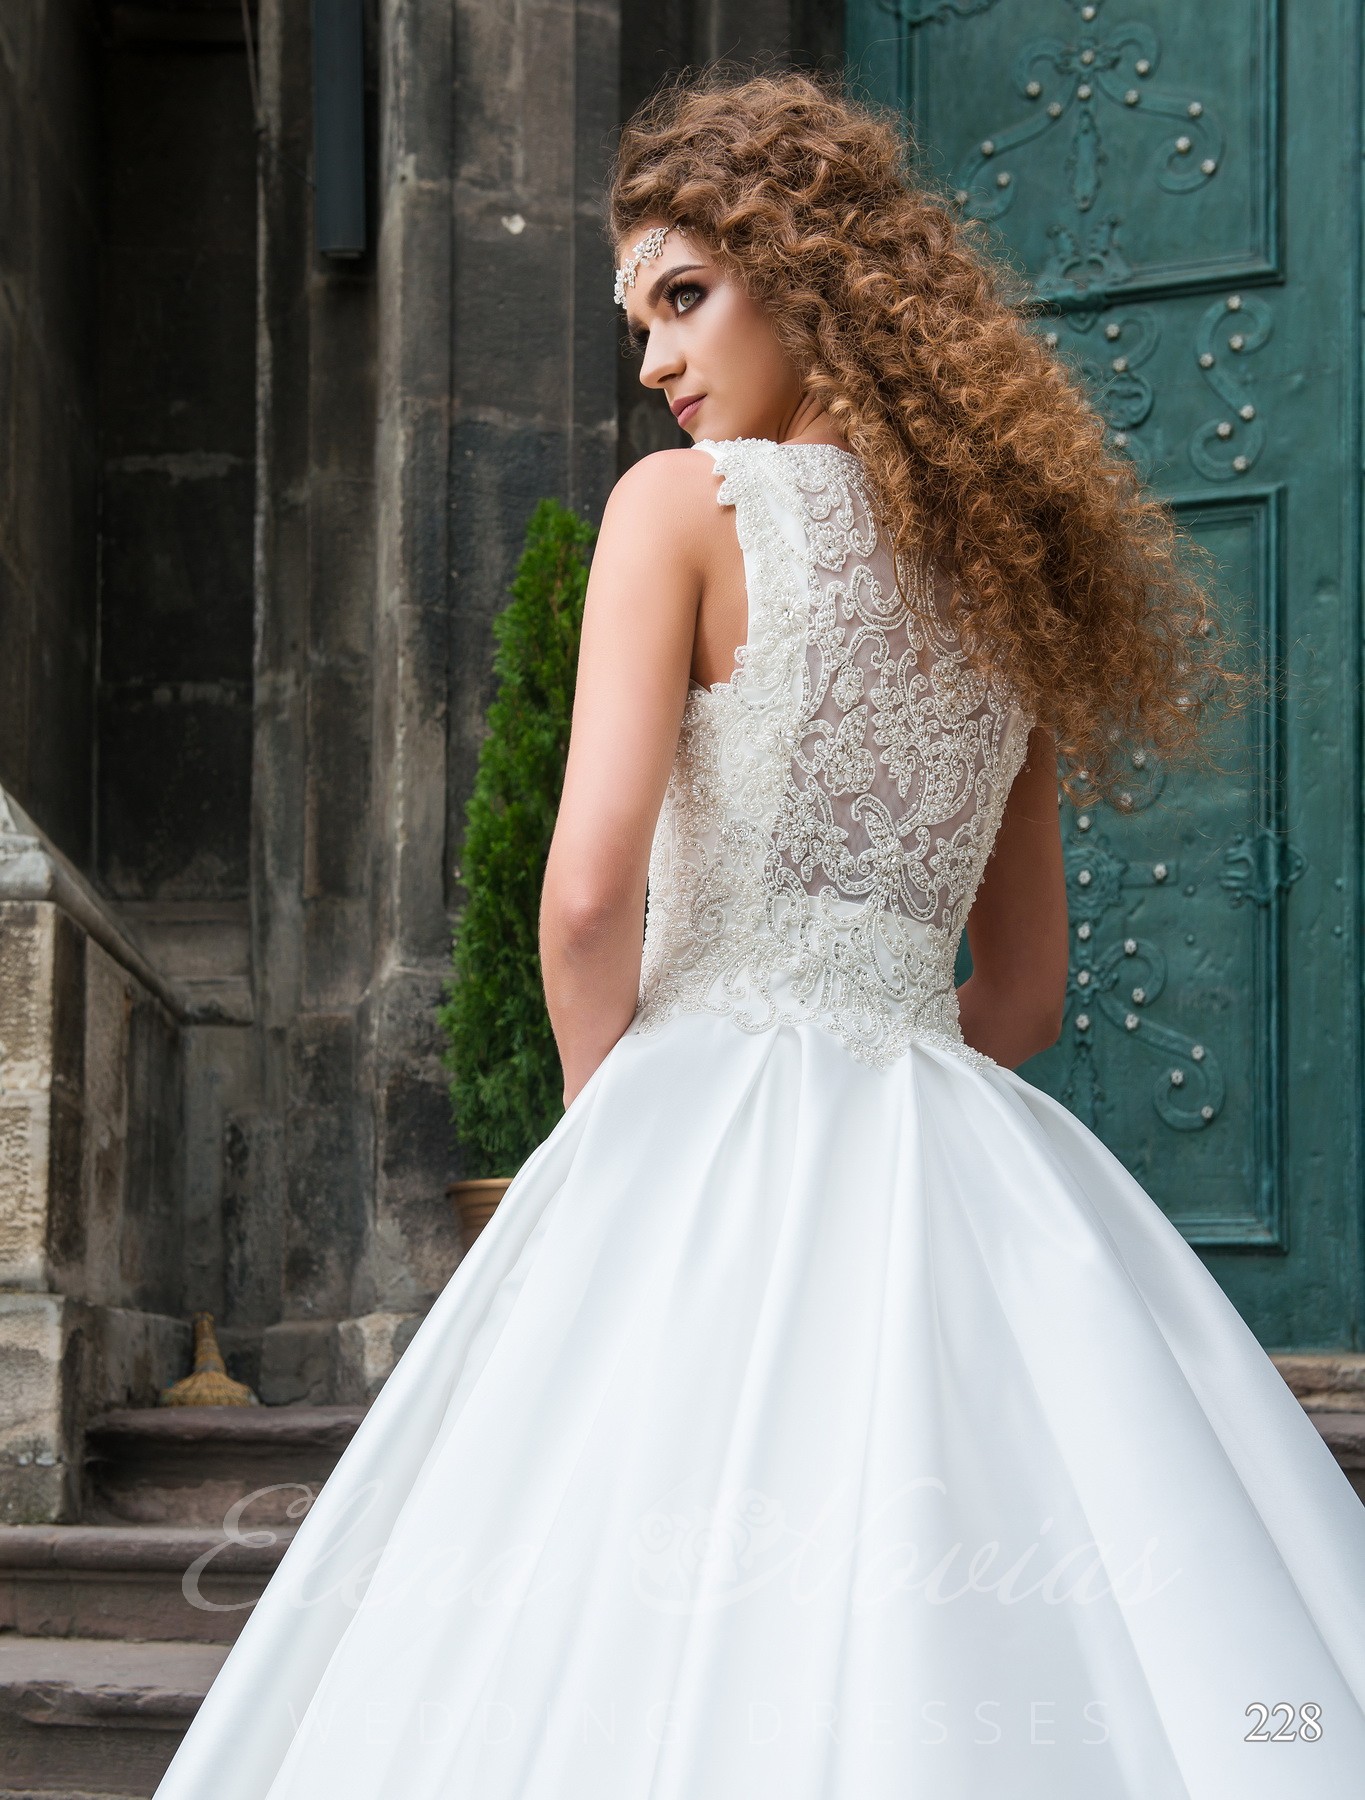 Stylish wedding dress model 228